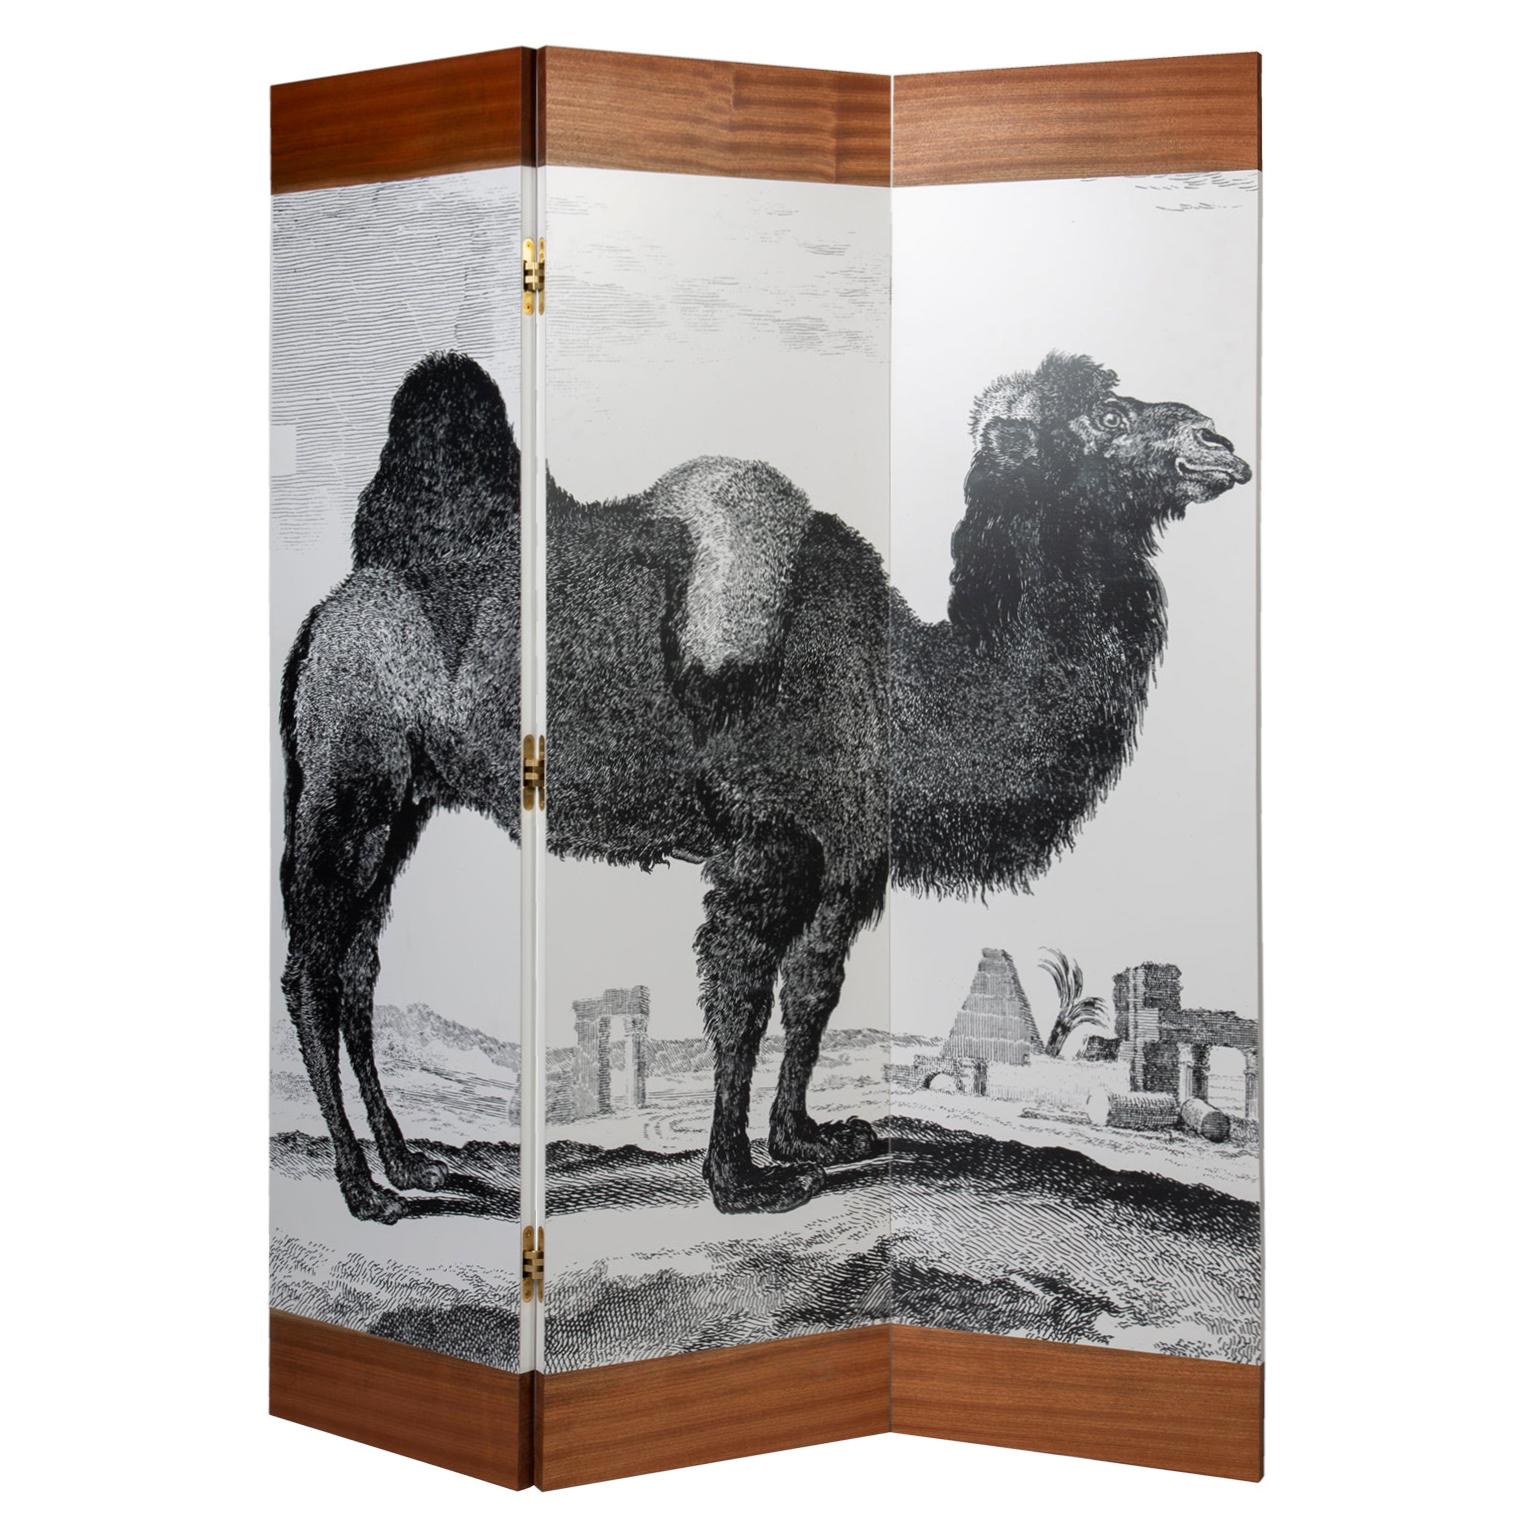 Camel Screen 3 Panel Folding Screen by DANAD Design, Contemporary